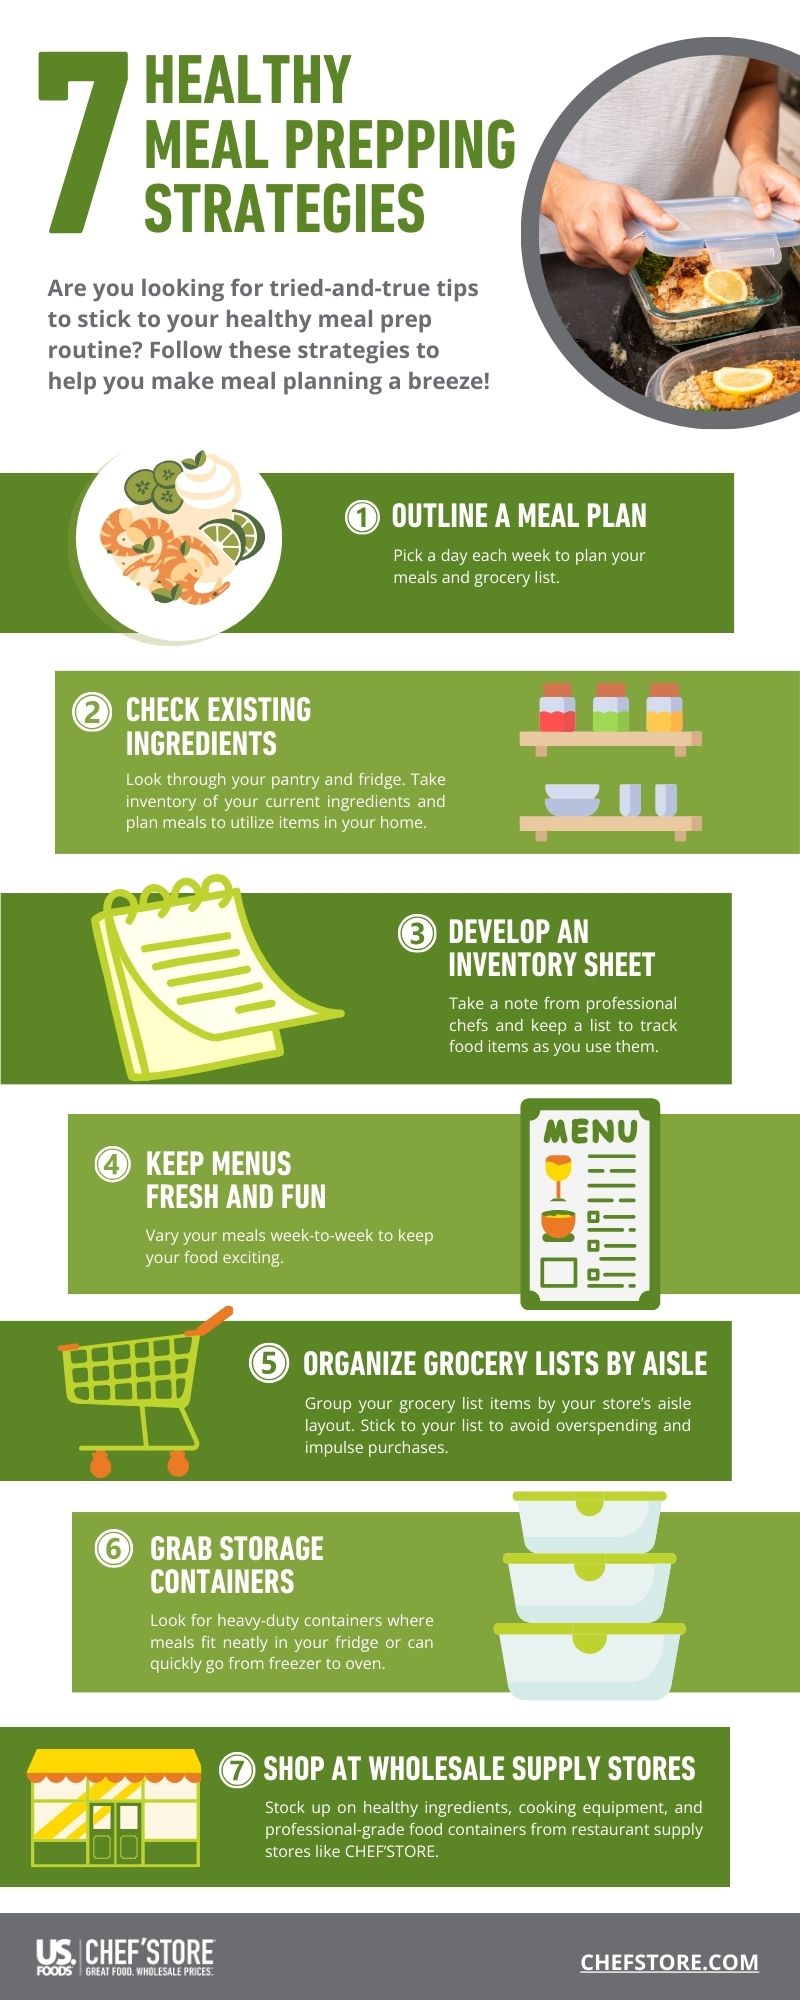 https://www.chefstore.com/images/imagebank/dec23/infographic-Healthy-Meal-Prepping-Strategies.jpg